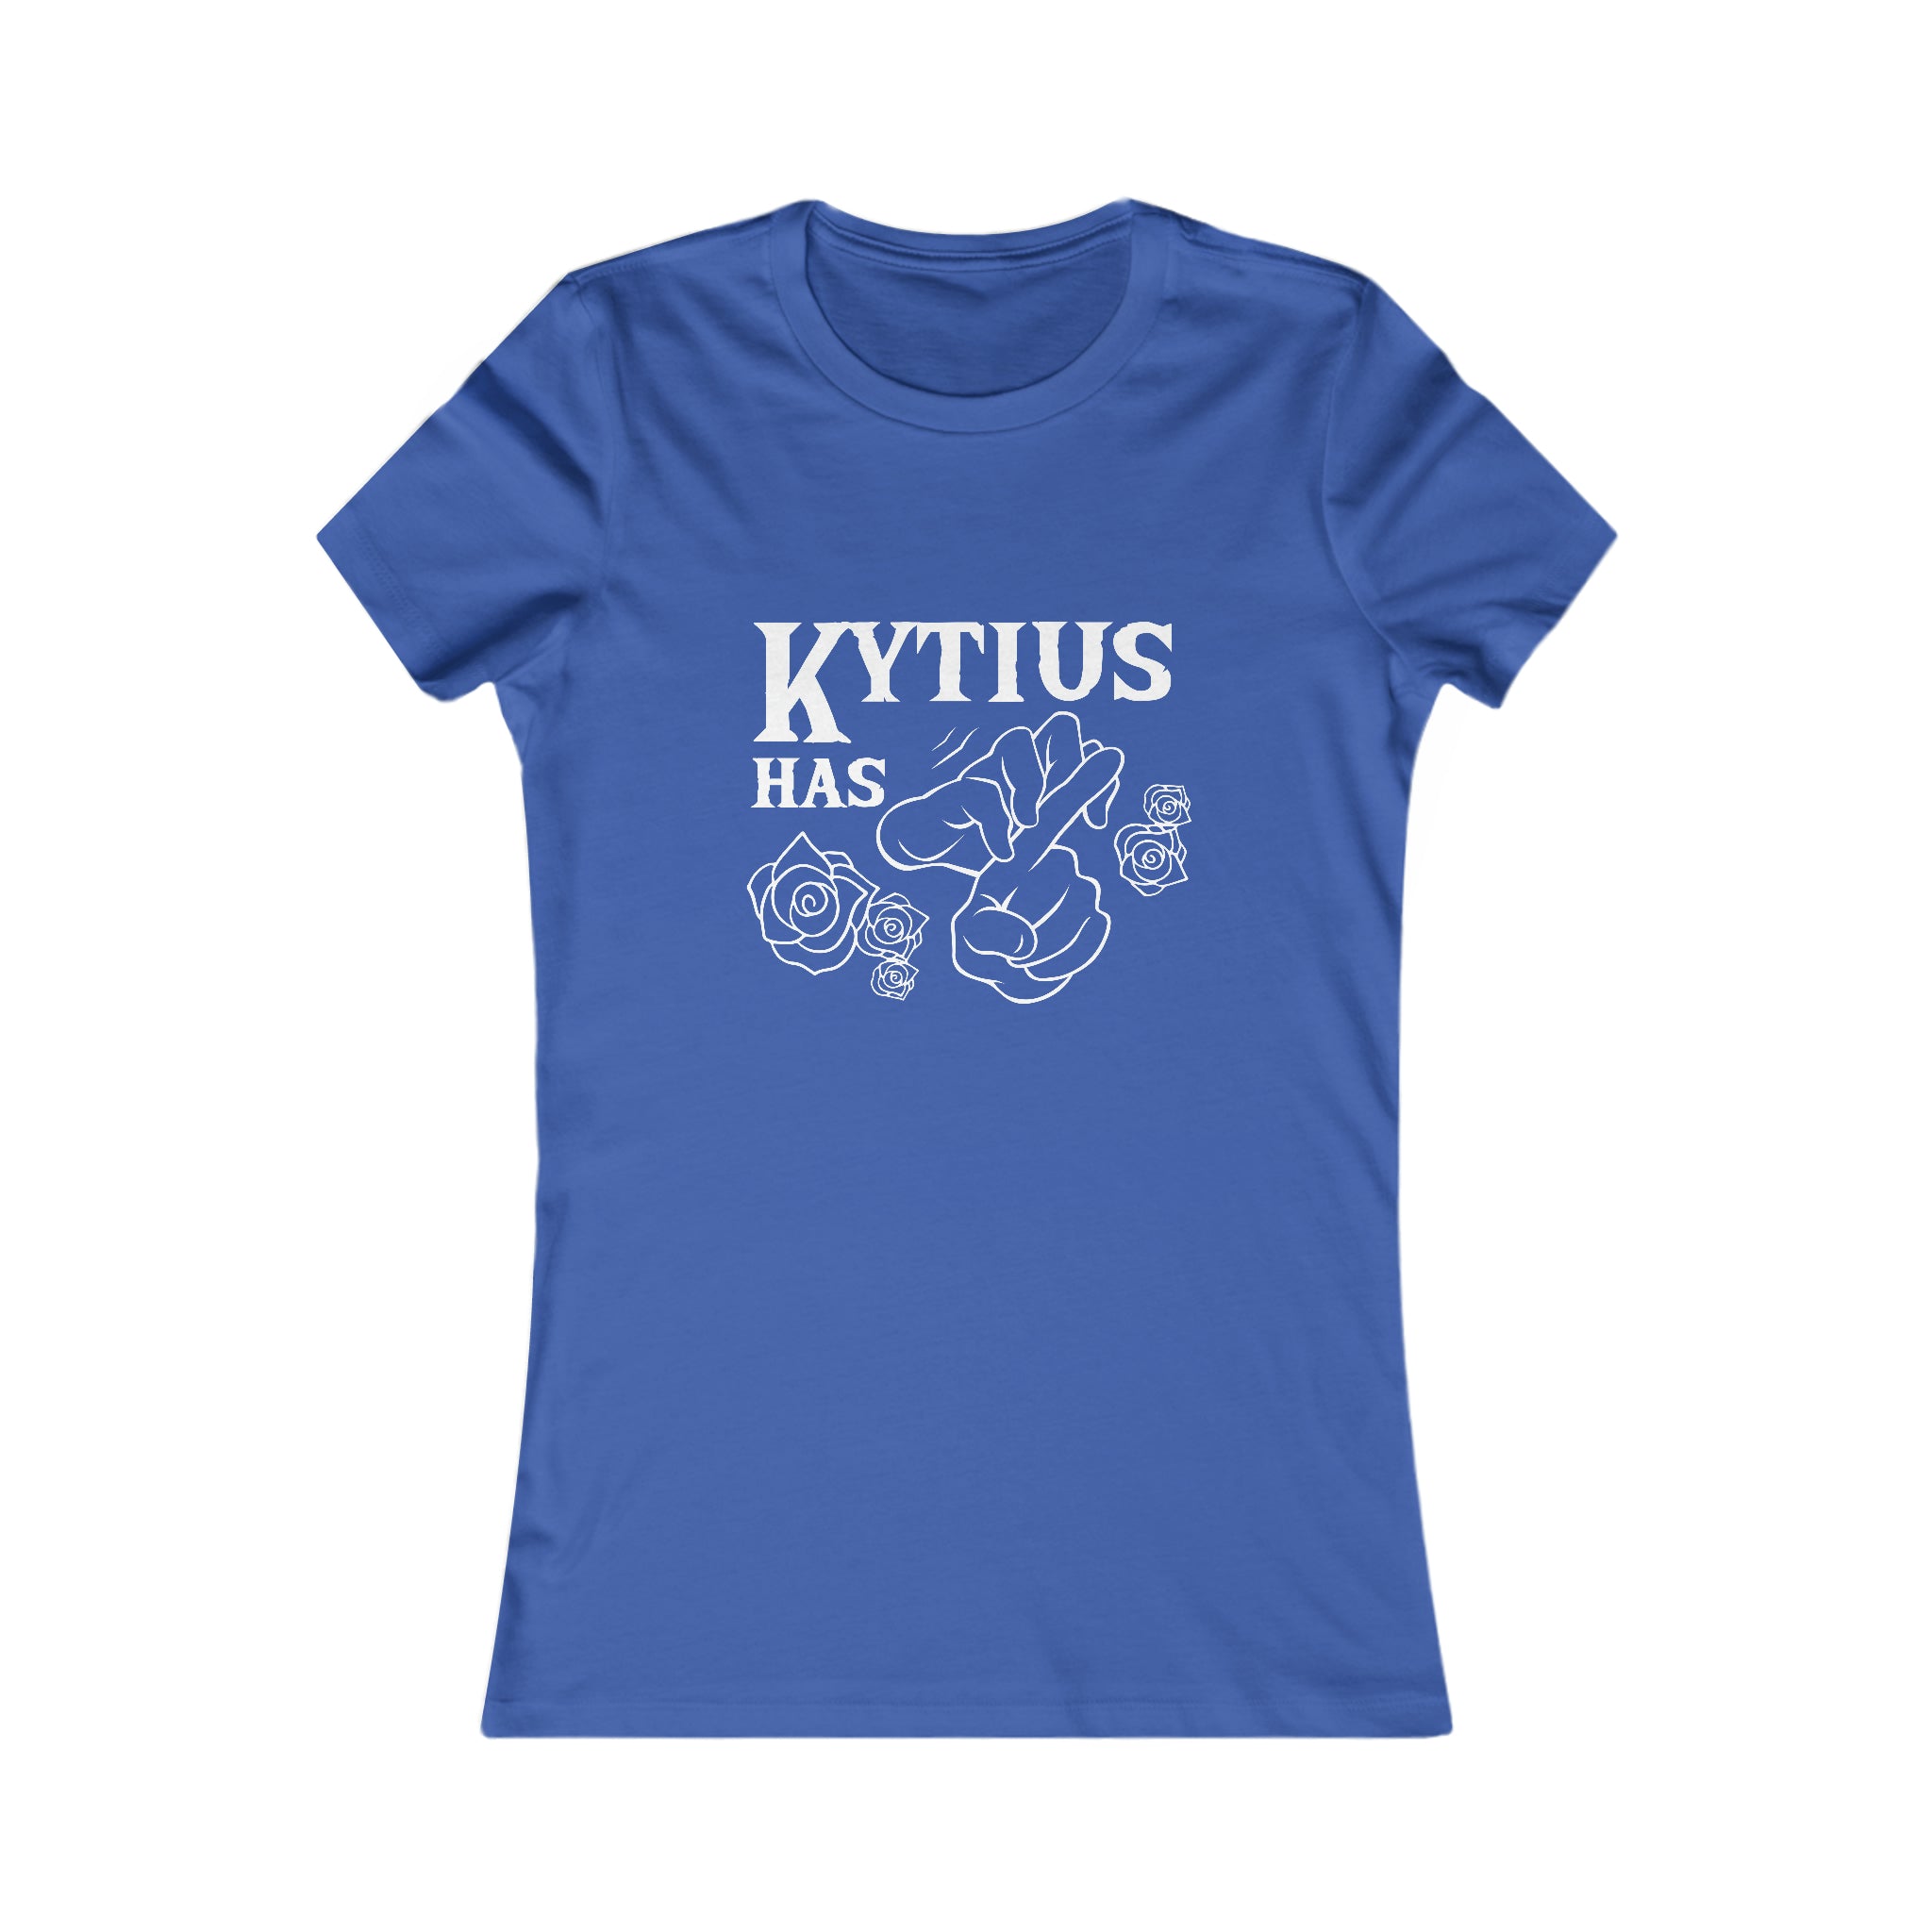 'Kytius has Herpes' Women's Crewneck T-shirt